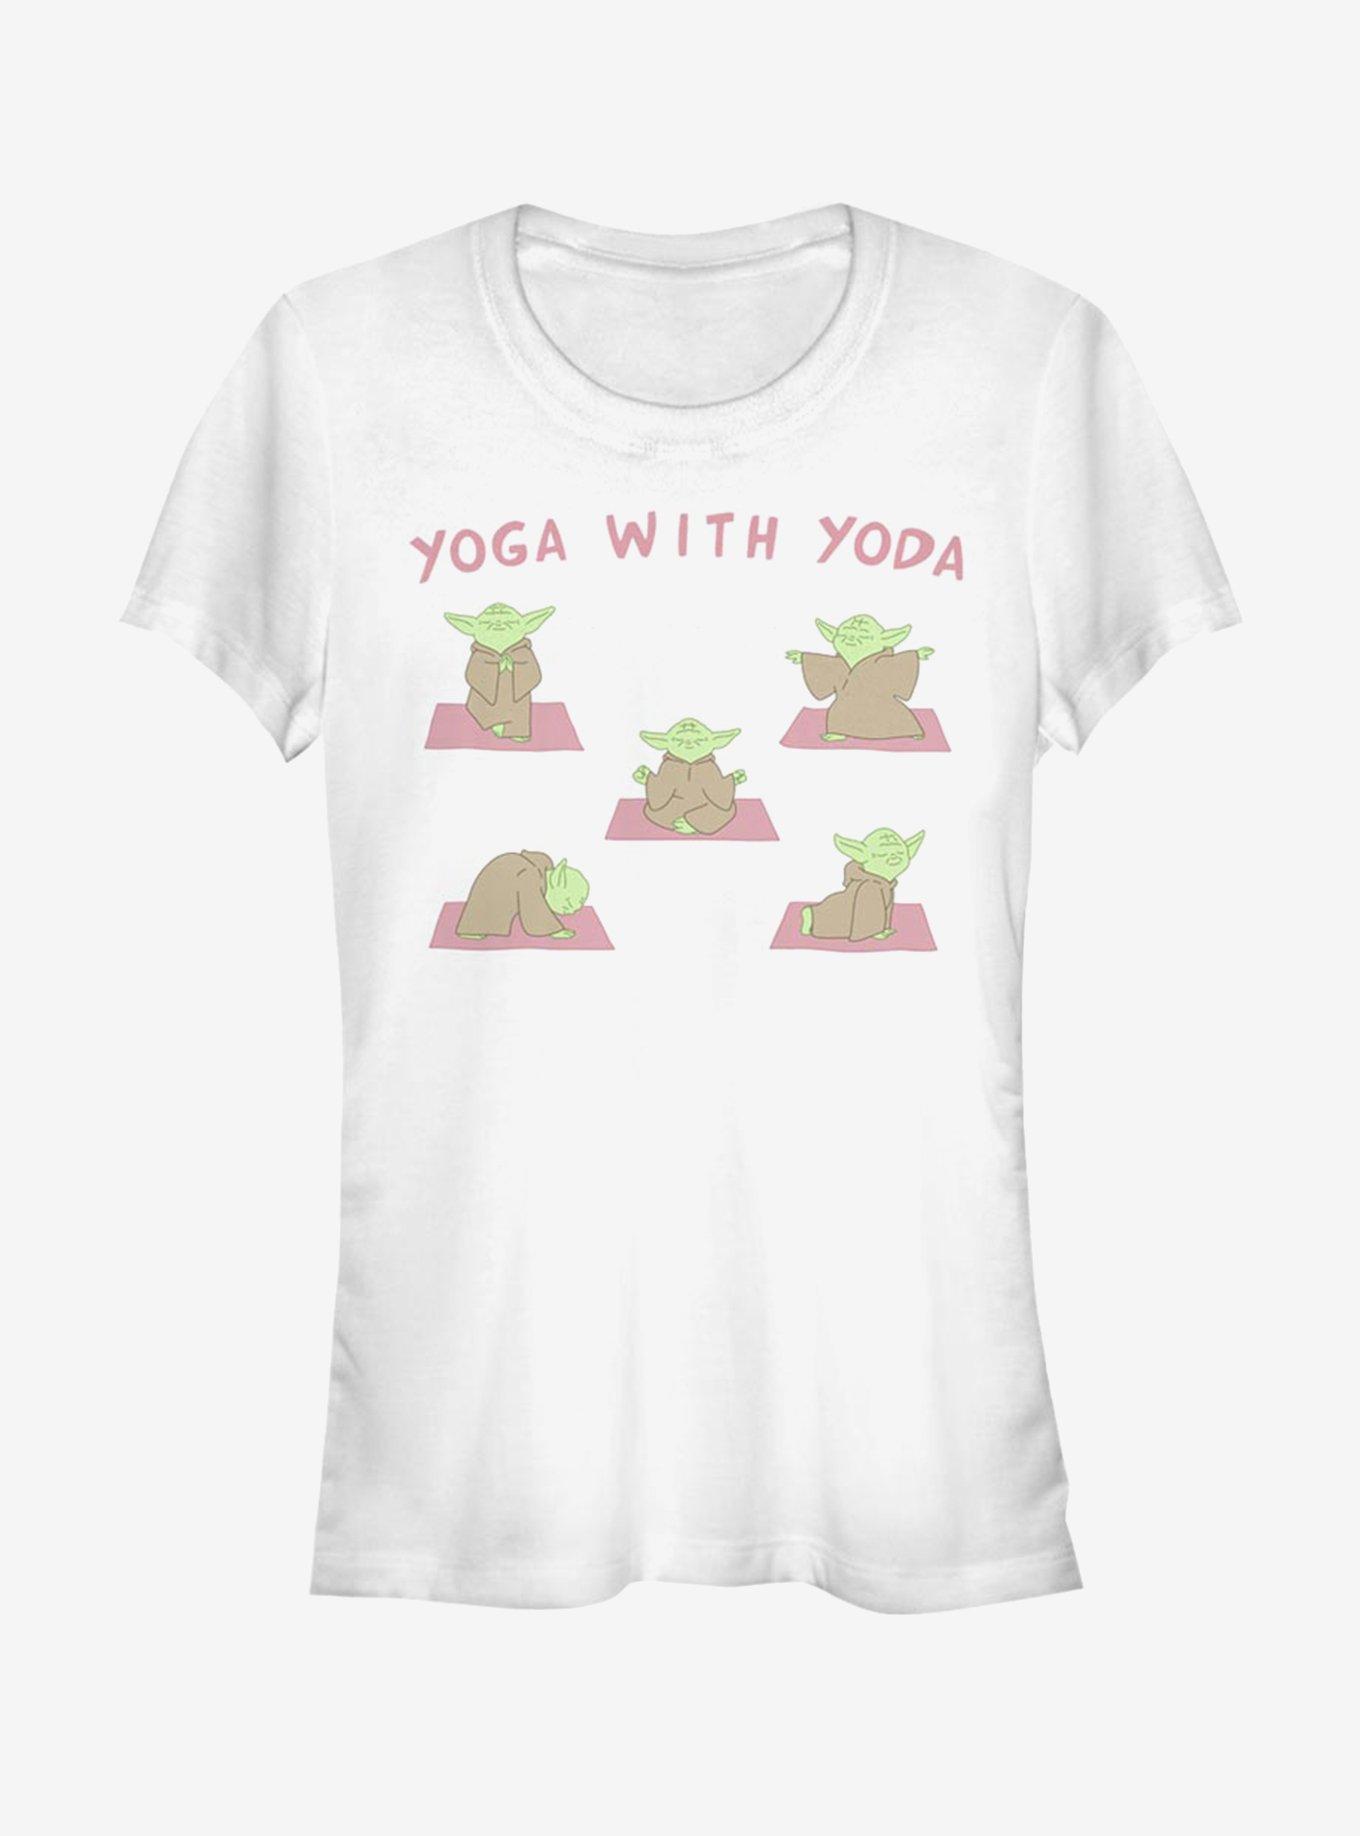 Star Wars Yoga With Yoda Girls T-Shirt, WHITE, hi-res